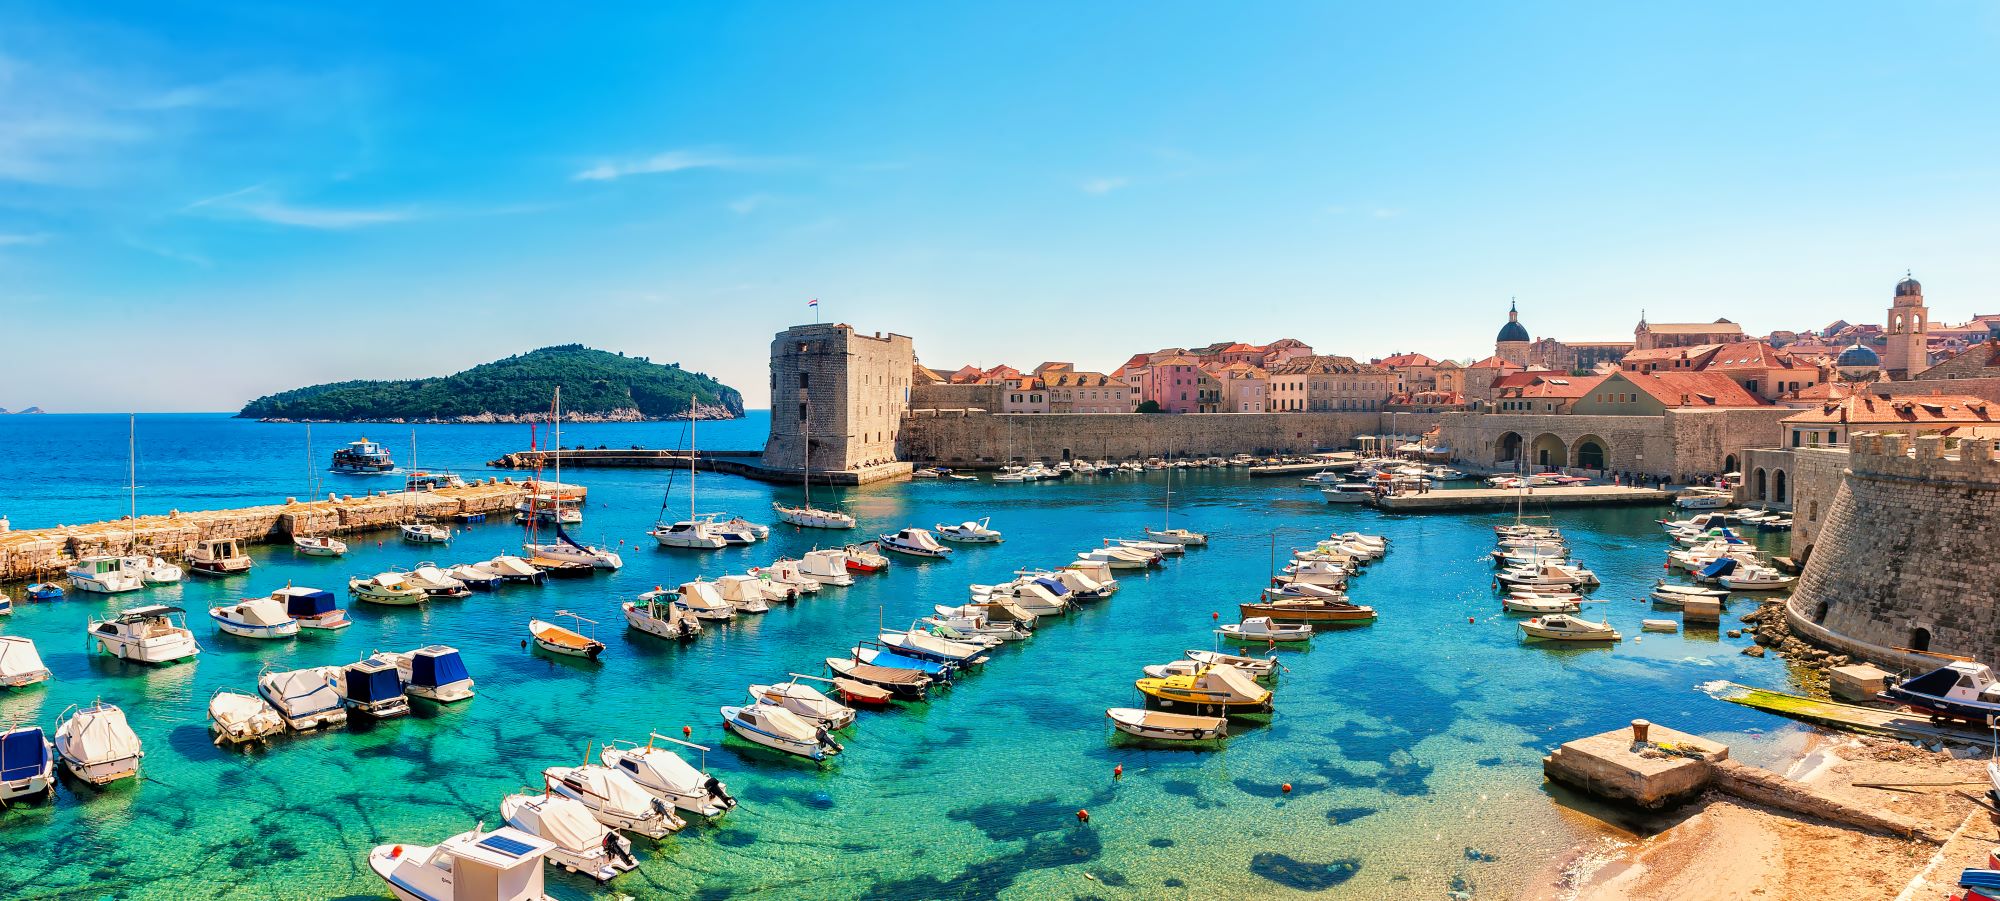 KNMtravel DMC, Croatia, Historical trails, cultural heritage, culture, Dubrovnik old town, UNESCO, city tour